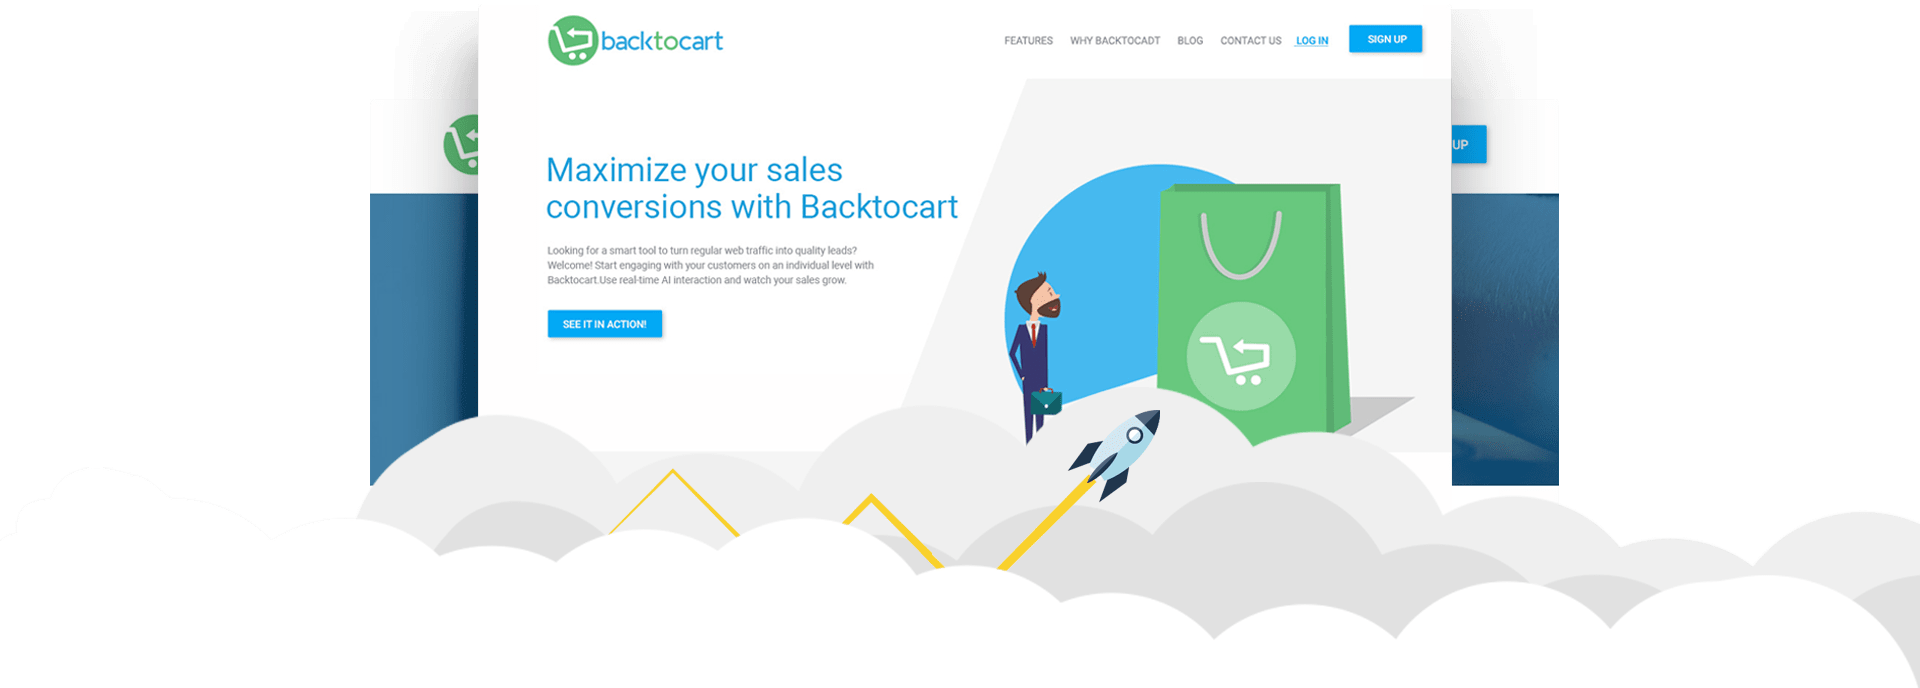 backtocart-web-project